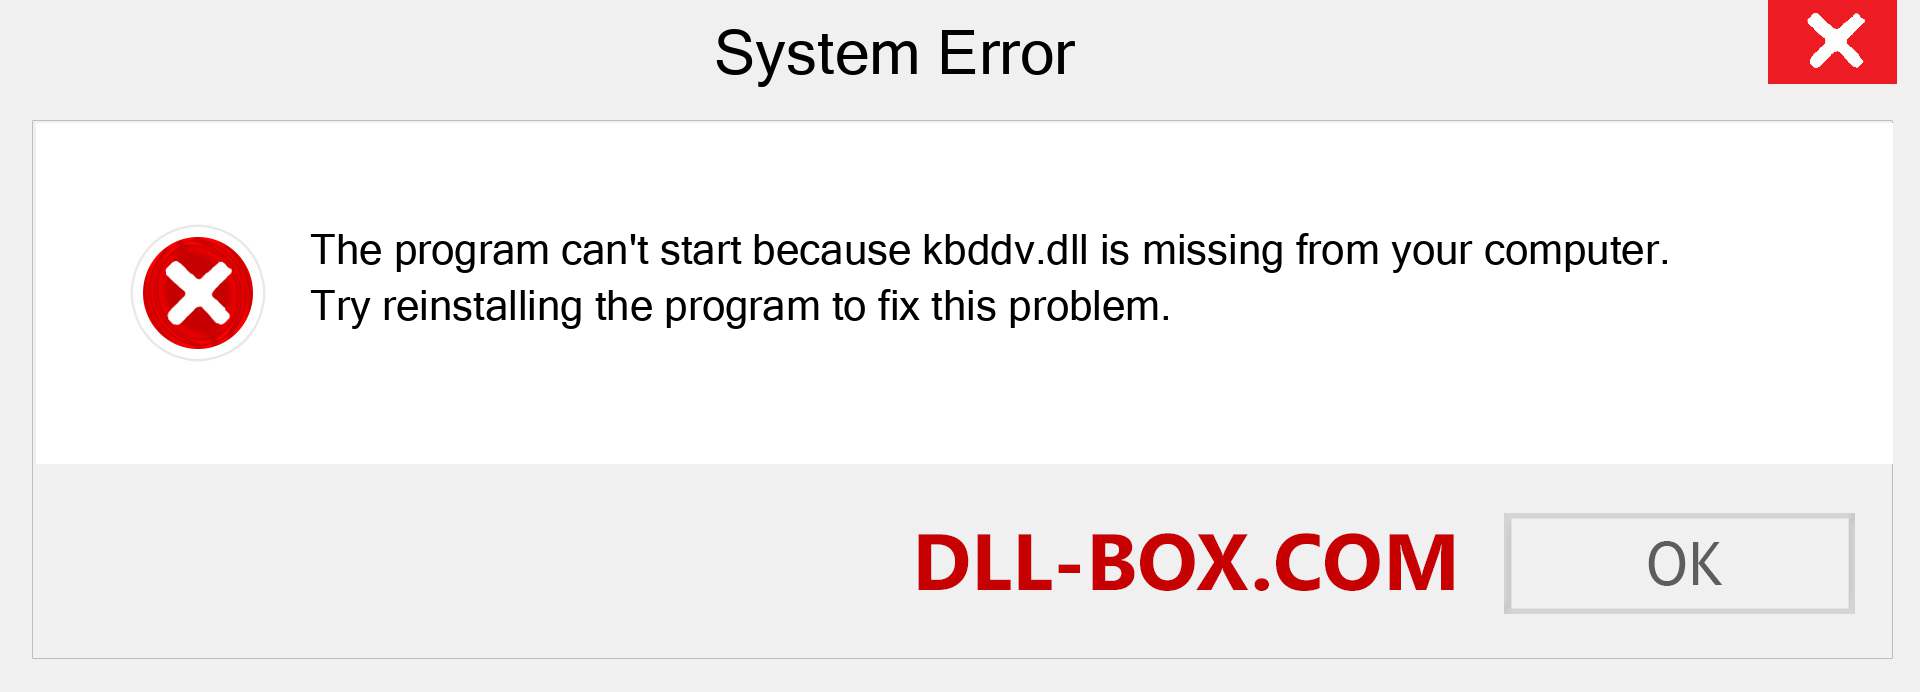  kbddv.dll file is missing?. Download for Windows 7, 8, 10 - Fix  kbddv dll Missing Error on Windows, photos, images